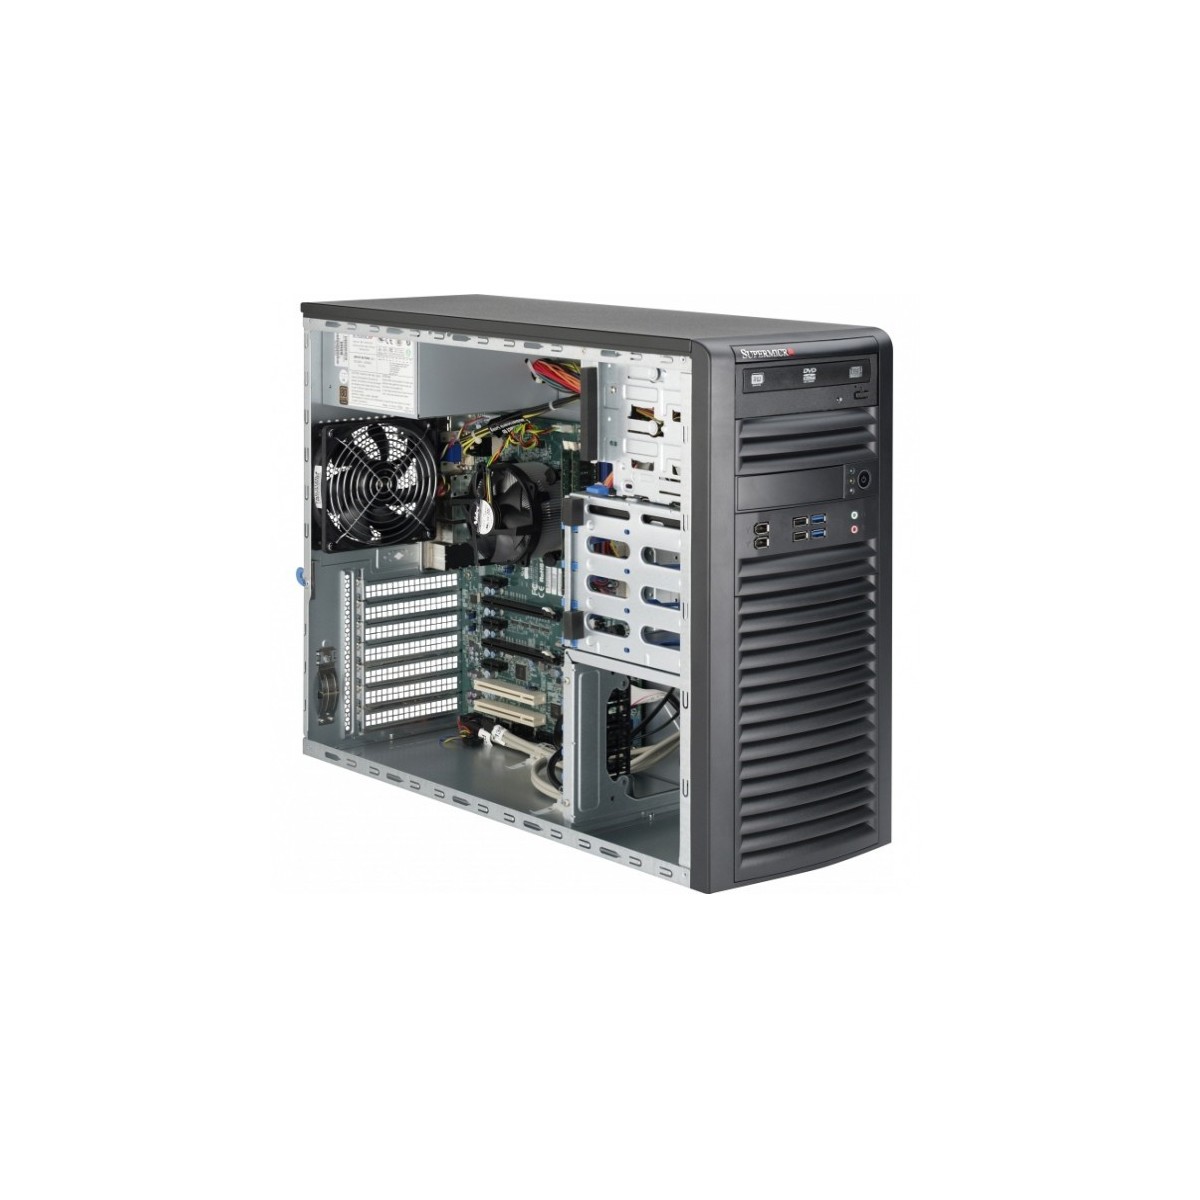 Supermicro SYS-5038A-IL - Midi-Tower - LGA 1150 (Socket H3) - Serial ATA III - Ethernet LAN - 500 W